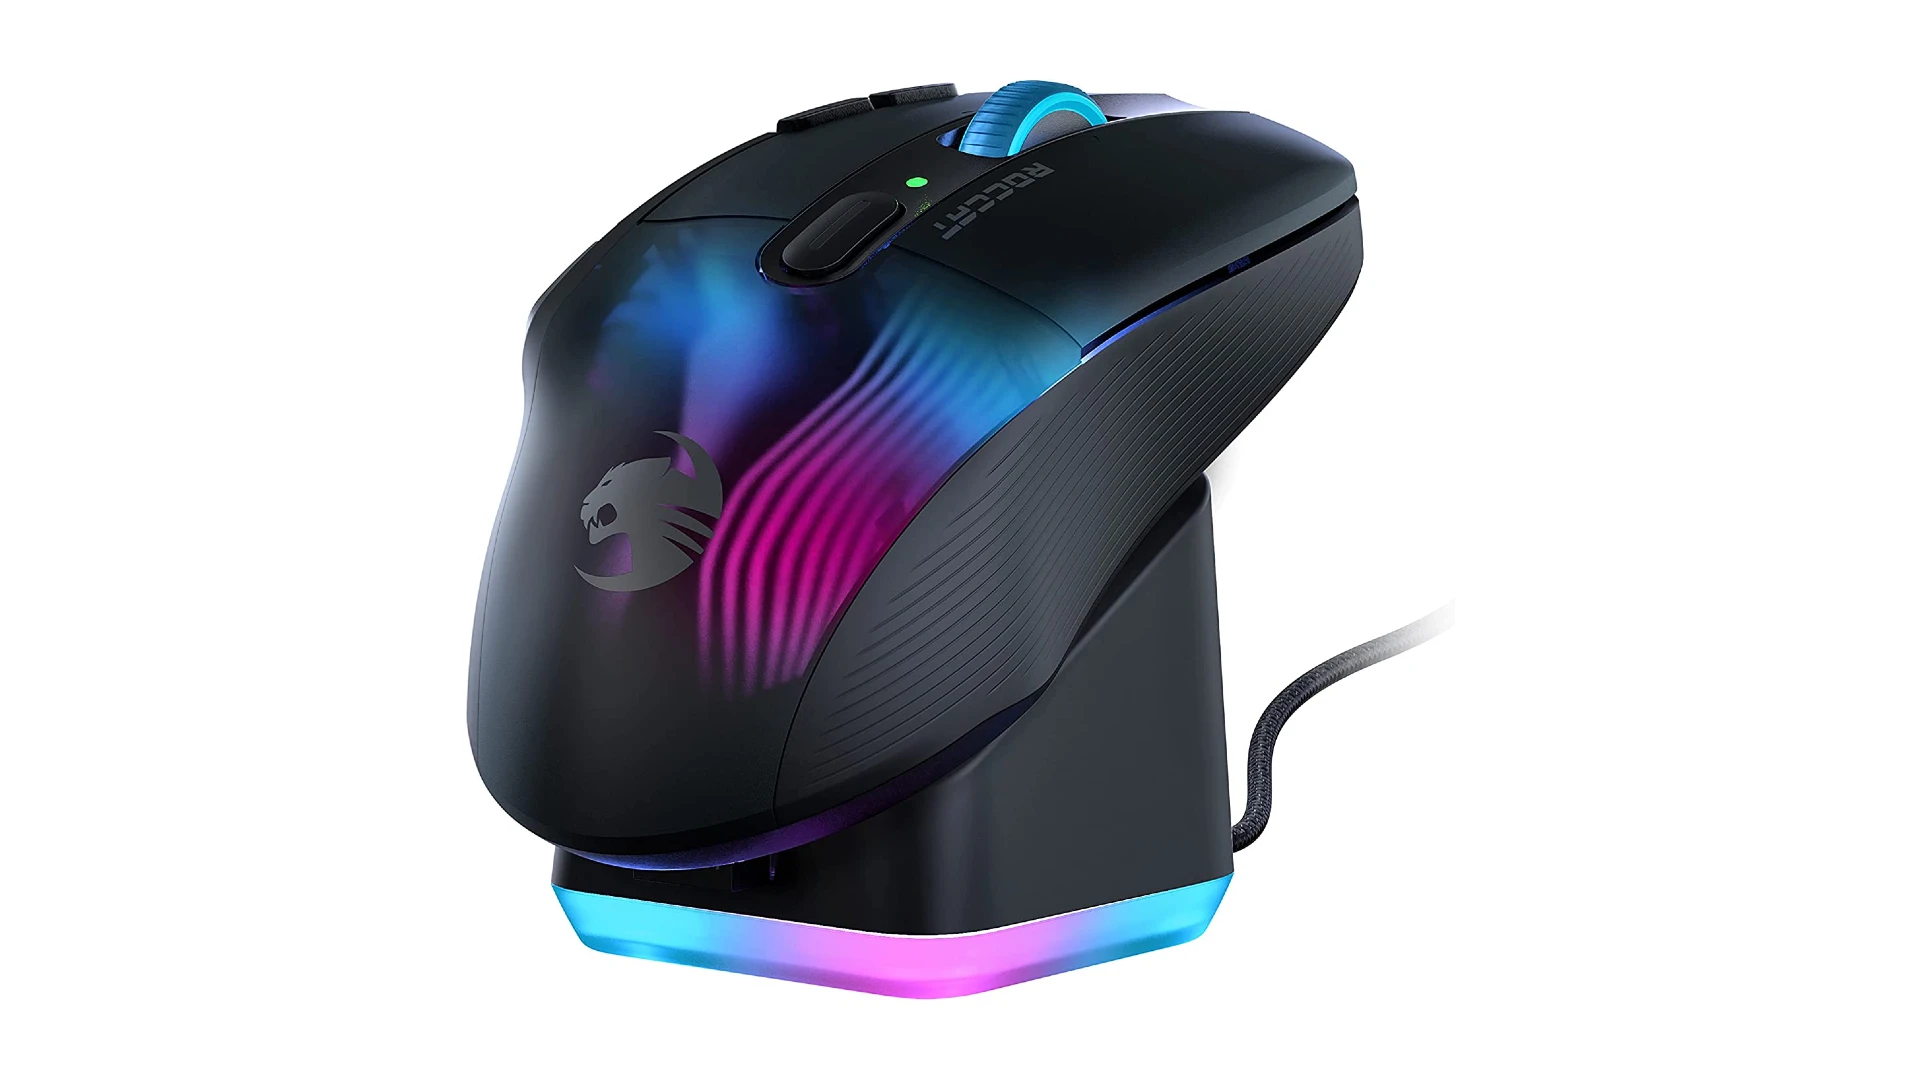 Kone Pro Wireless Mouse